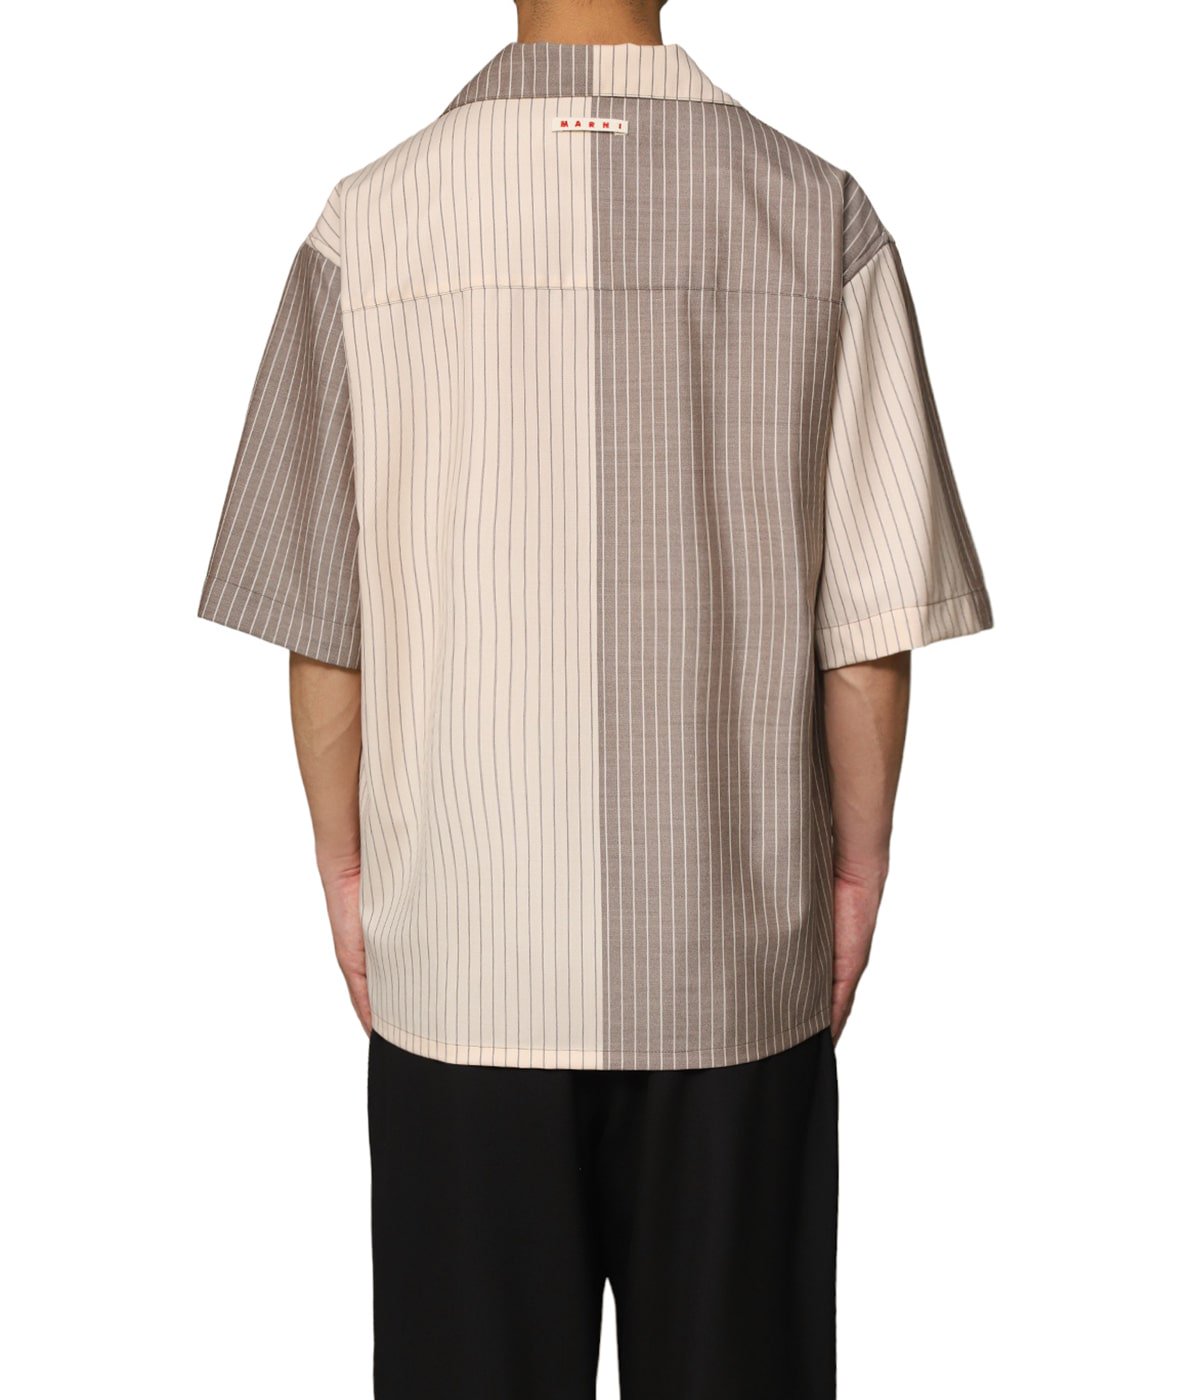 S/S SHIRT | MARNI(マルニ) / トップス 半袖シャツ (メンズ)の通販 